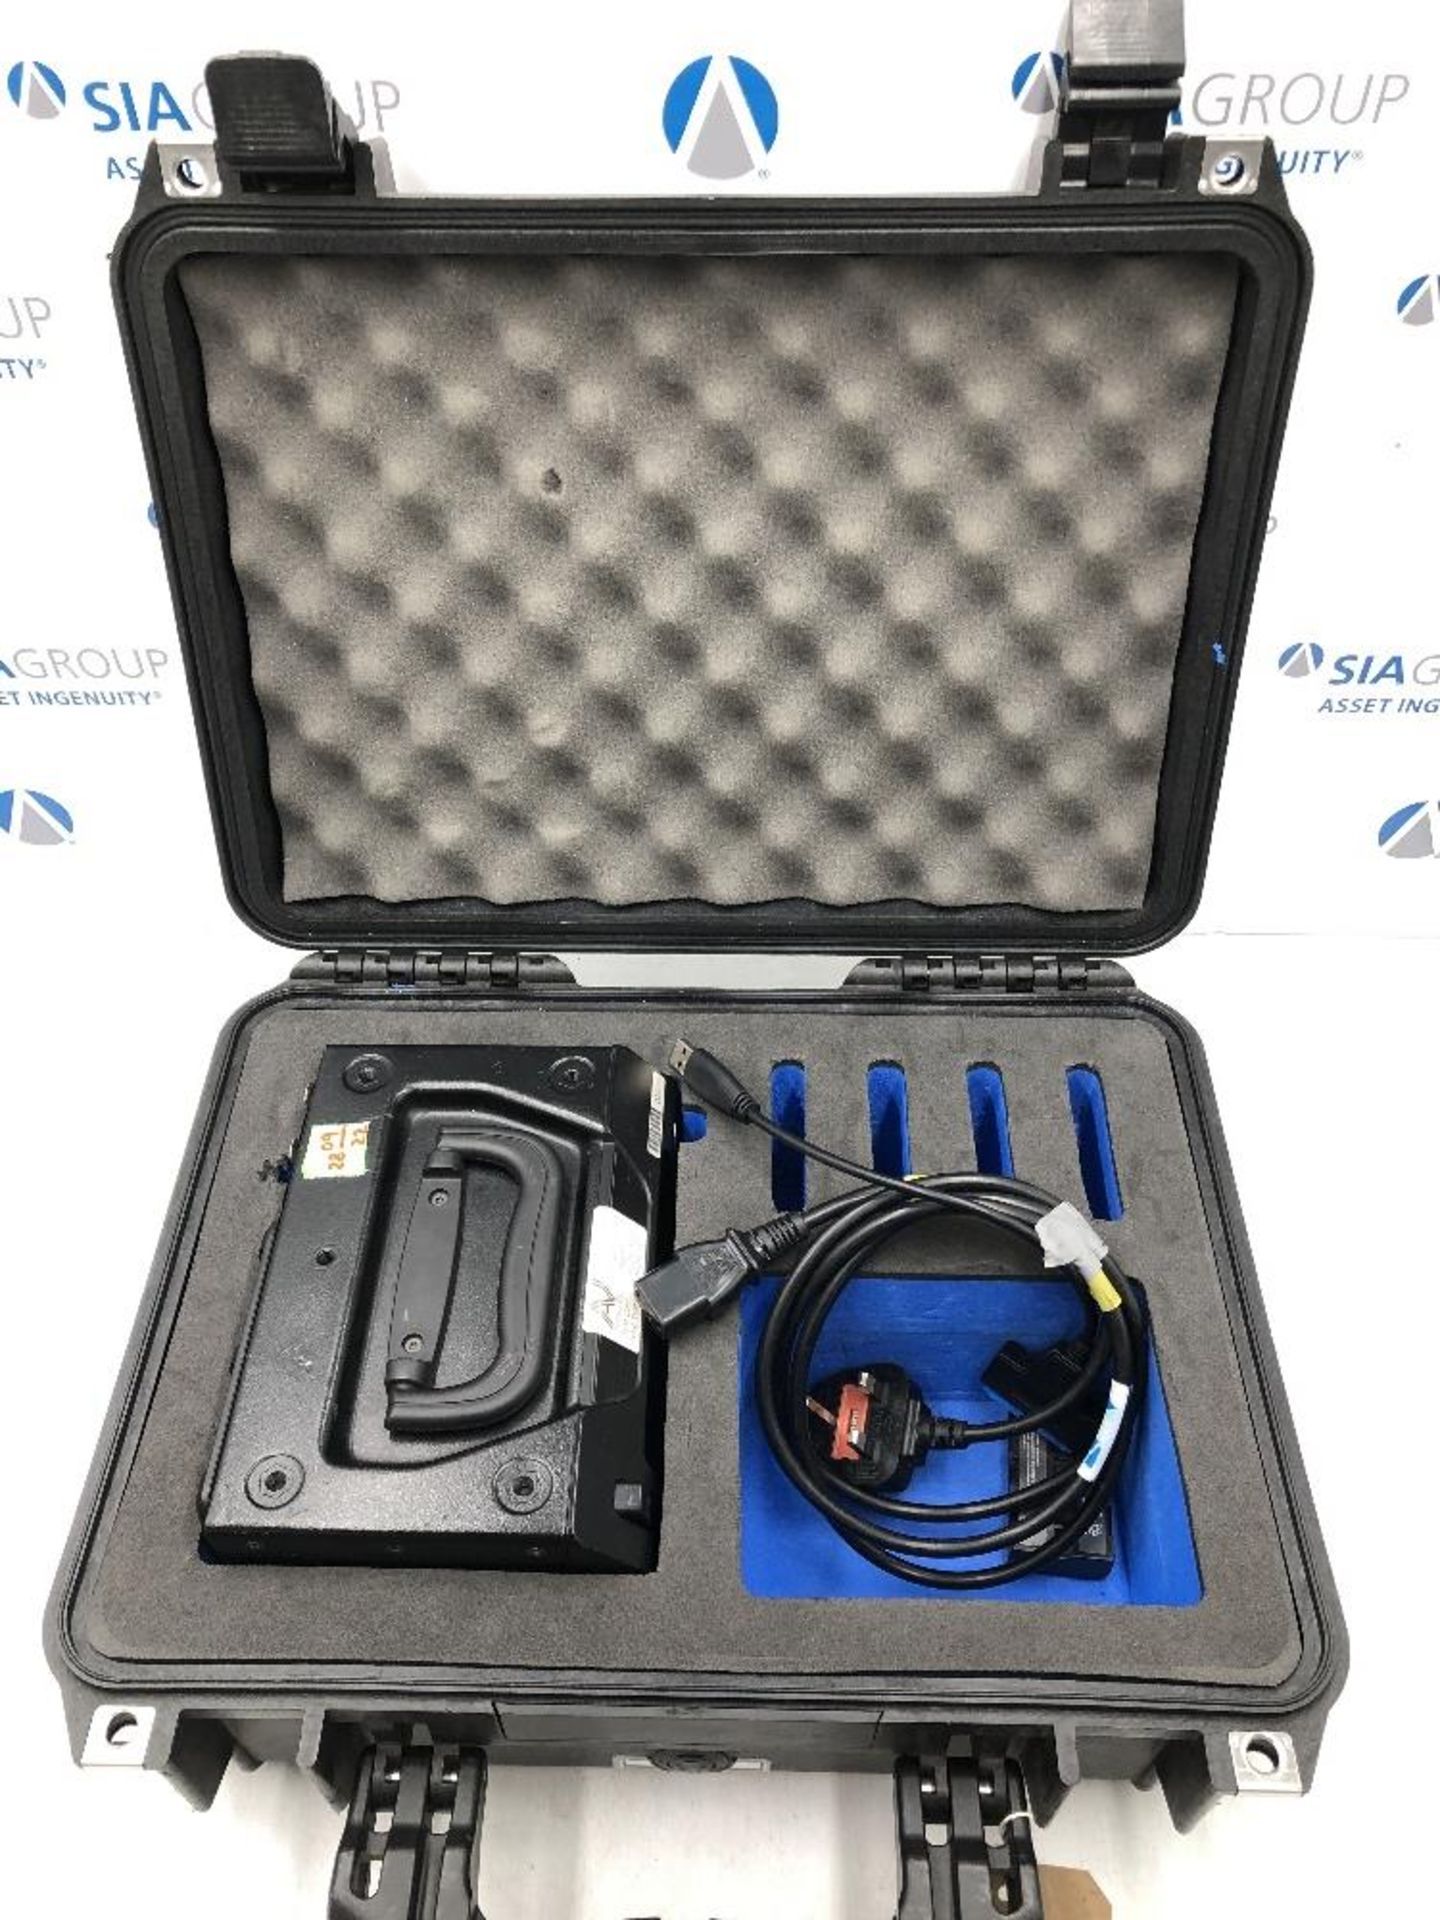 Atomos Ronin SDI Recorder/Player with Protective Case and PSU